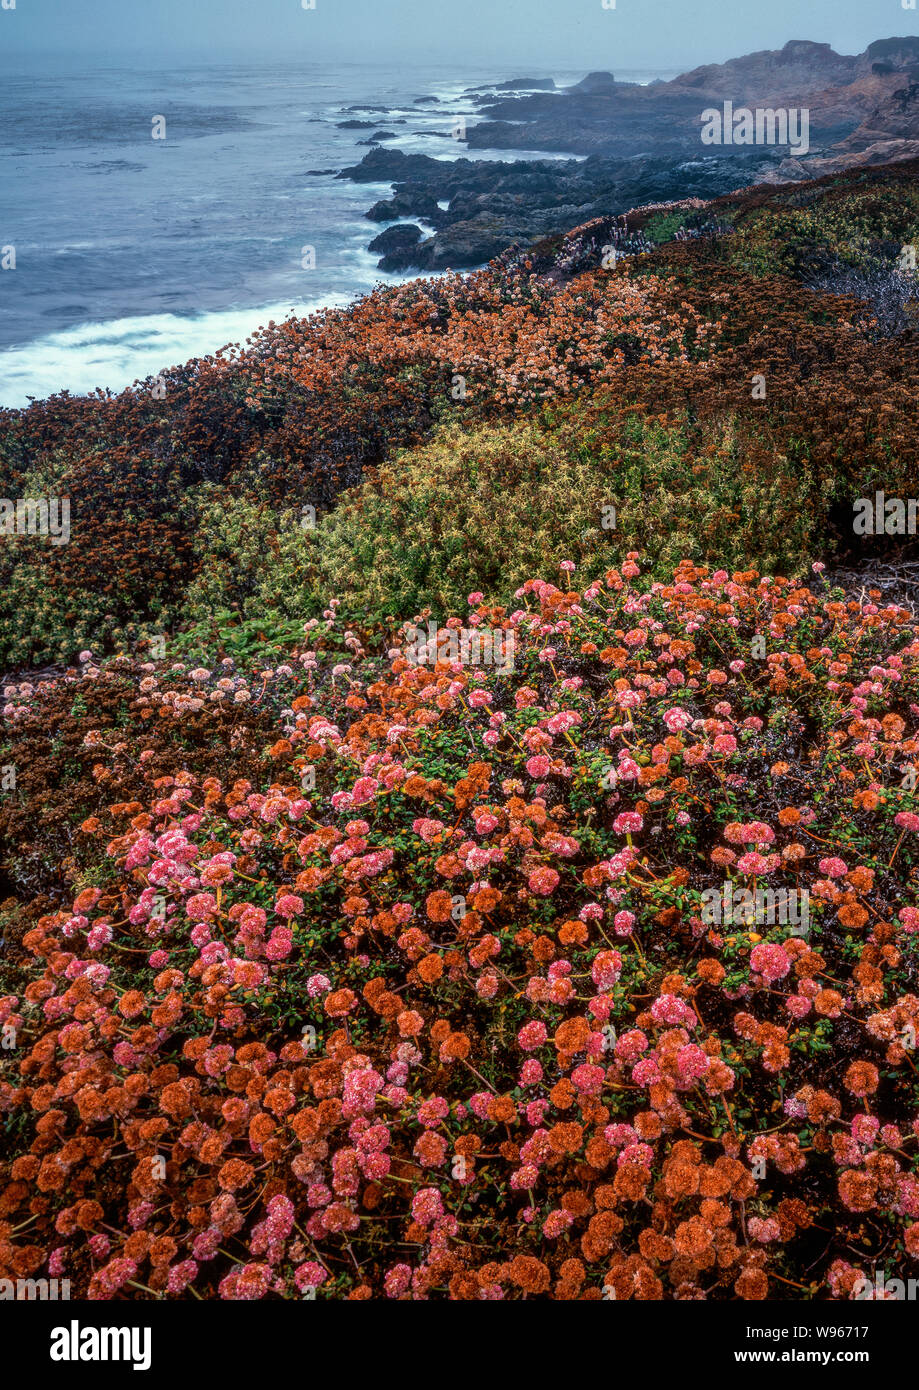 Buckwheat, Coastal Fog, Soberanes Point, Garrapata State Park, Big Sur, Monterey County, California Stock Photo